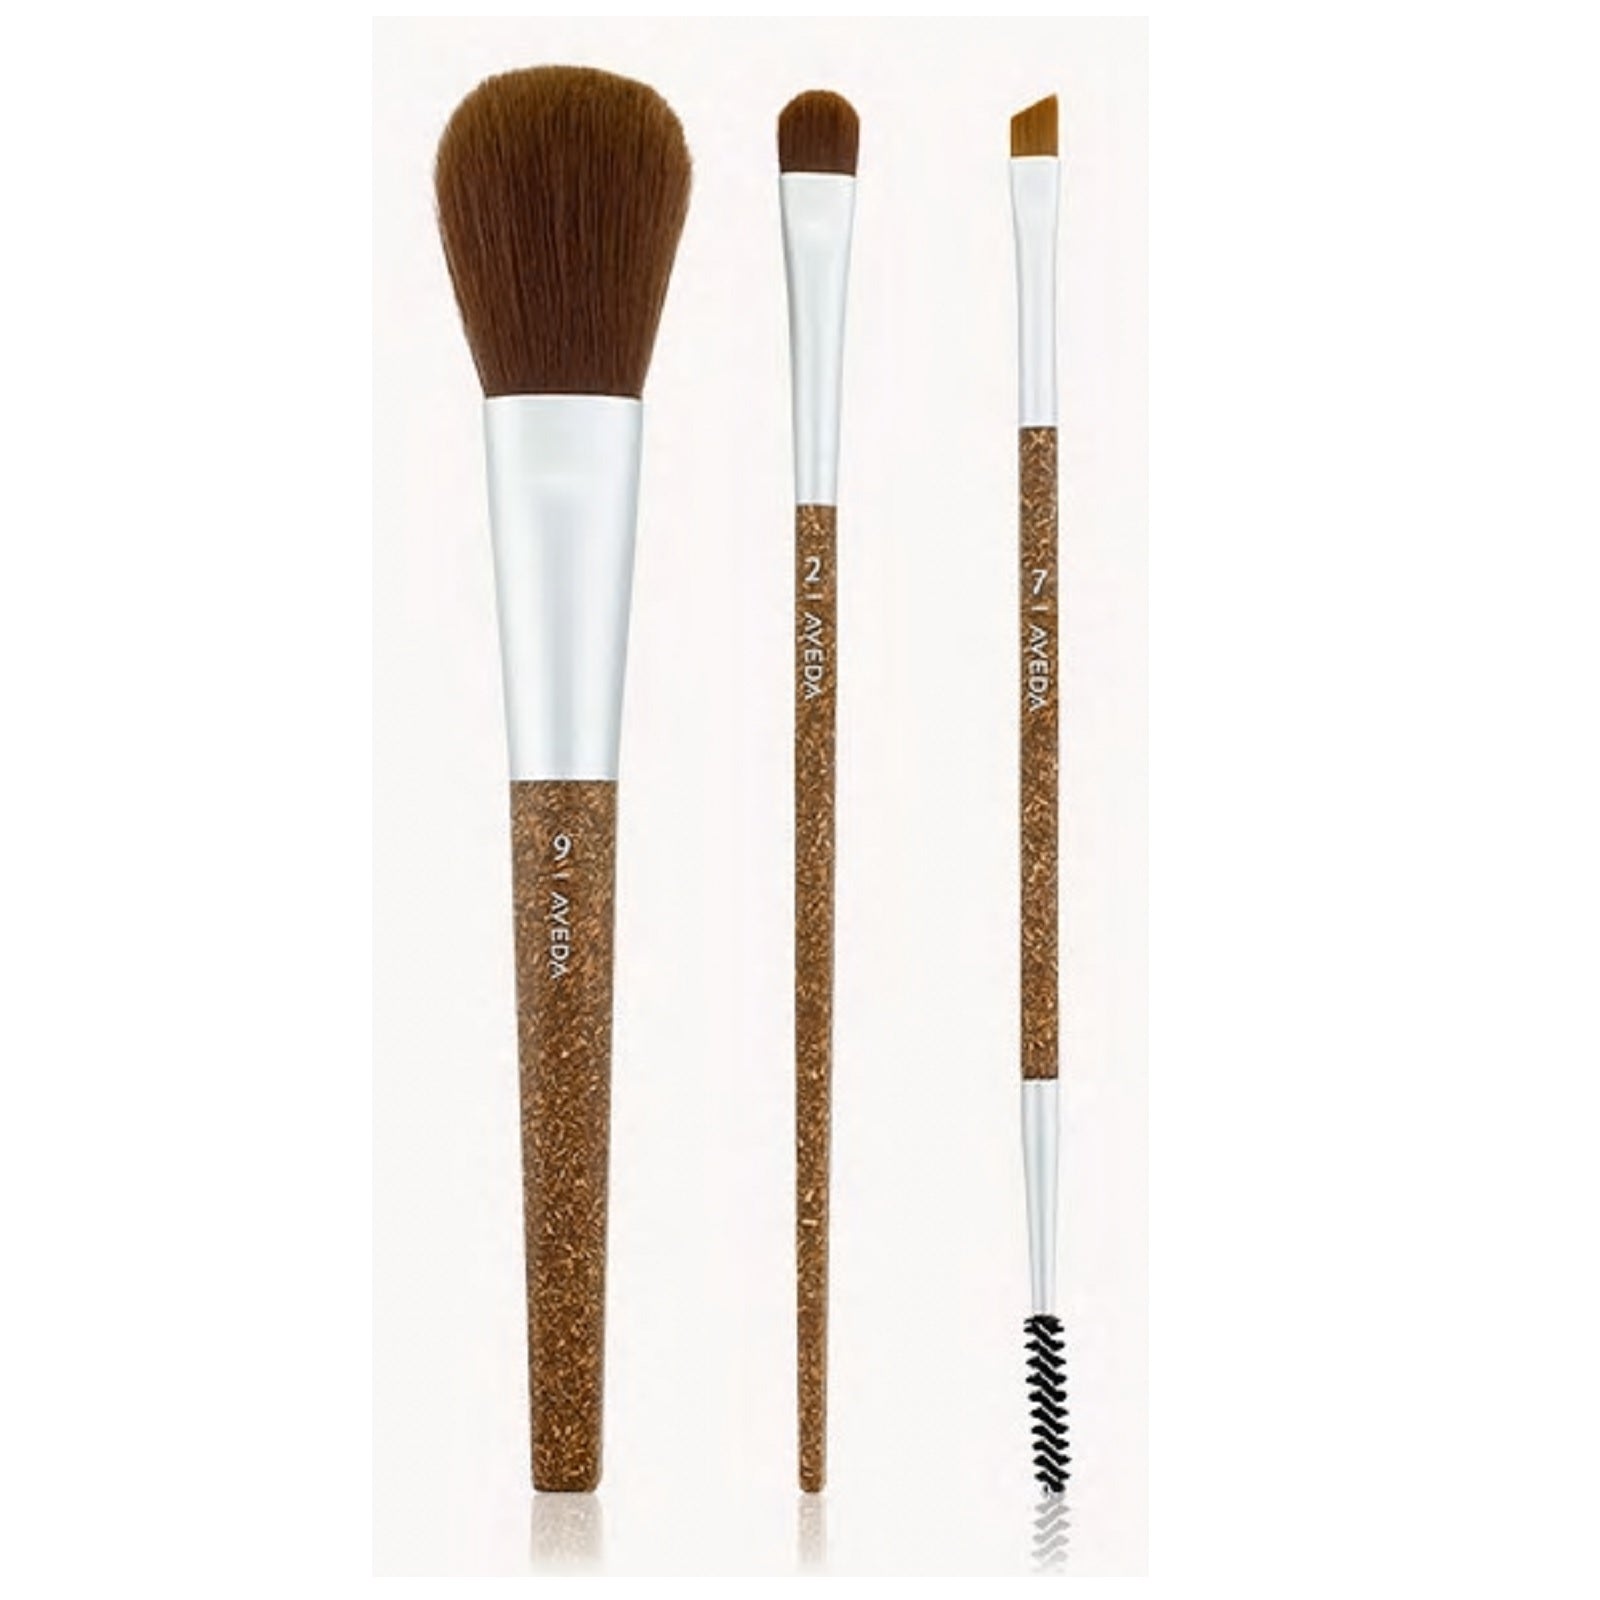 AVEDA NIB Flax Sticks Daily Effects Brush Set of 3 Brushes (eye, brown and blush) #2 #7 #9